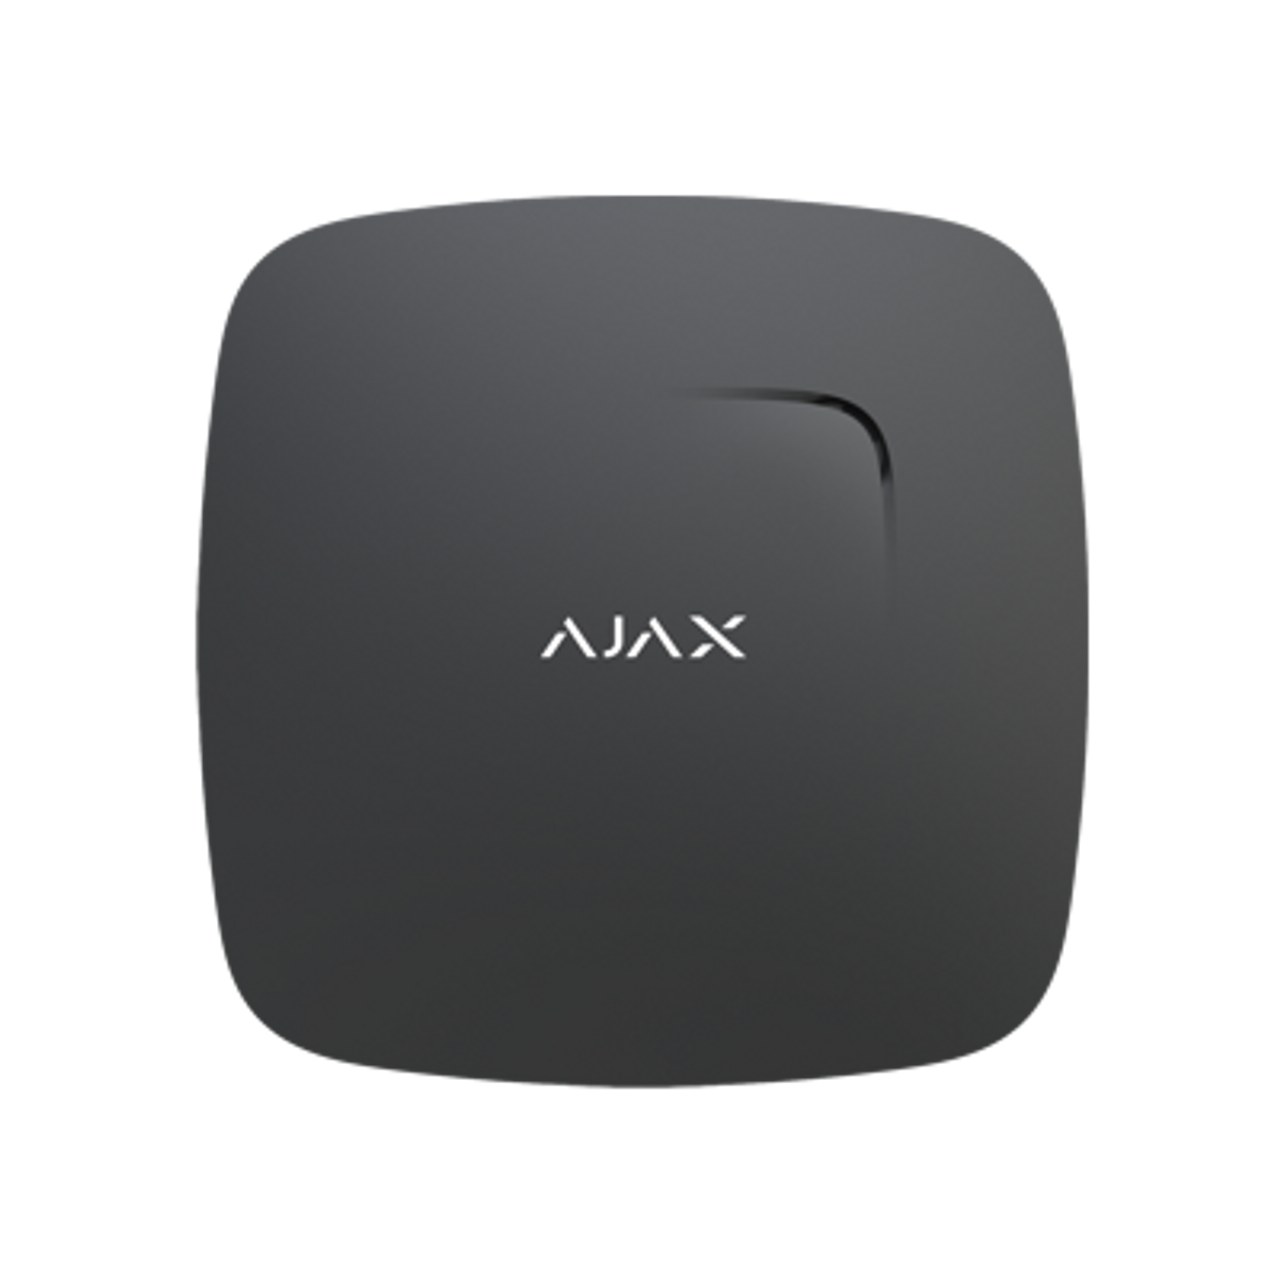 AJAX FireProtect Wireless Smoke & Heat – Black (AJA-8188)